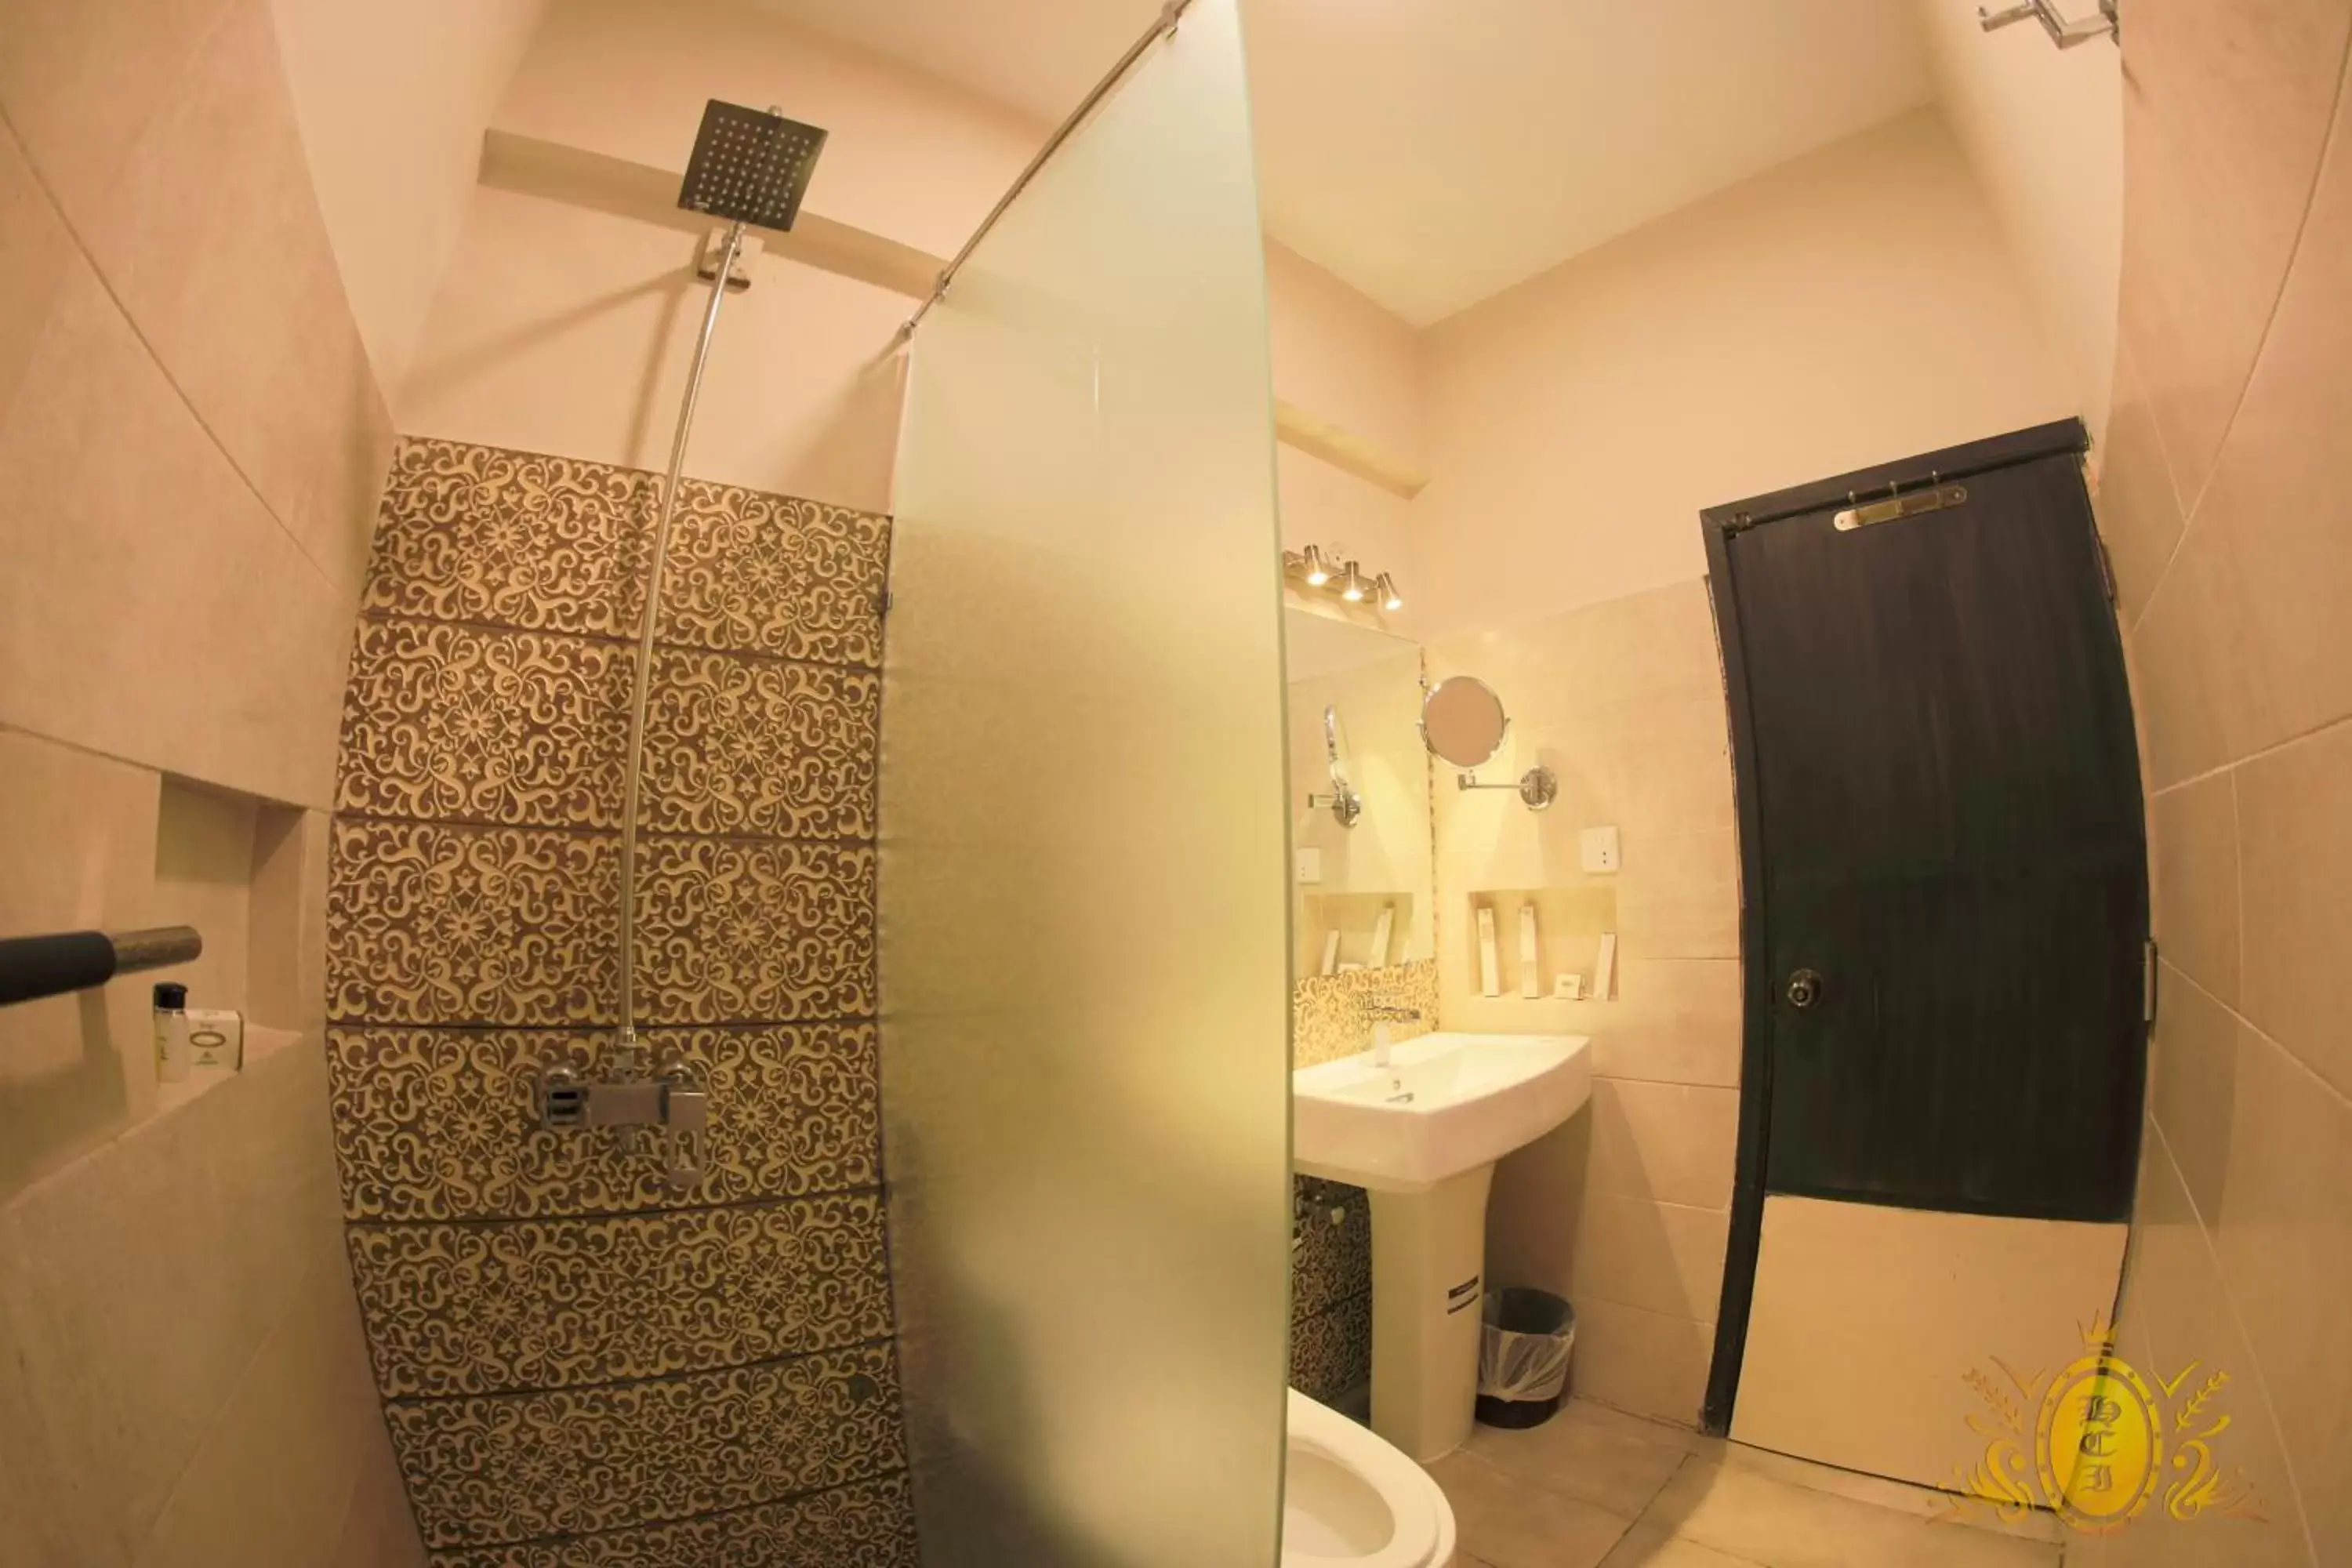 Shower, Bathroom in Hotel Crown Inn